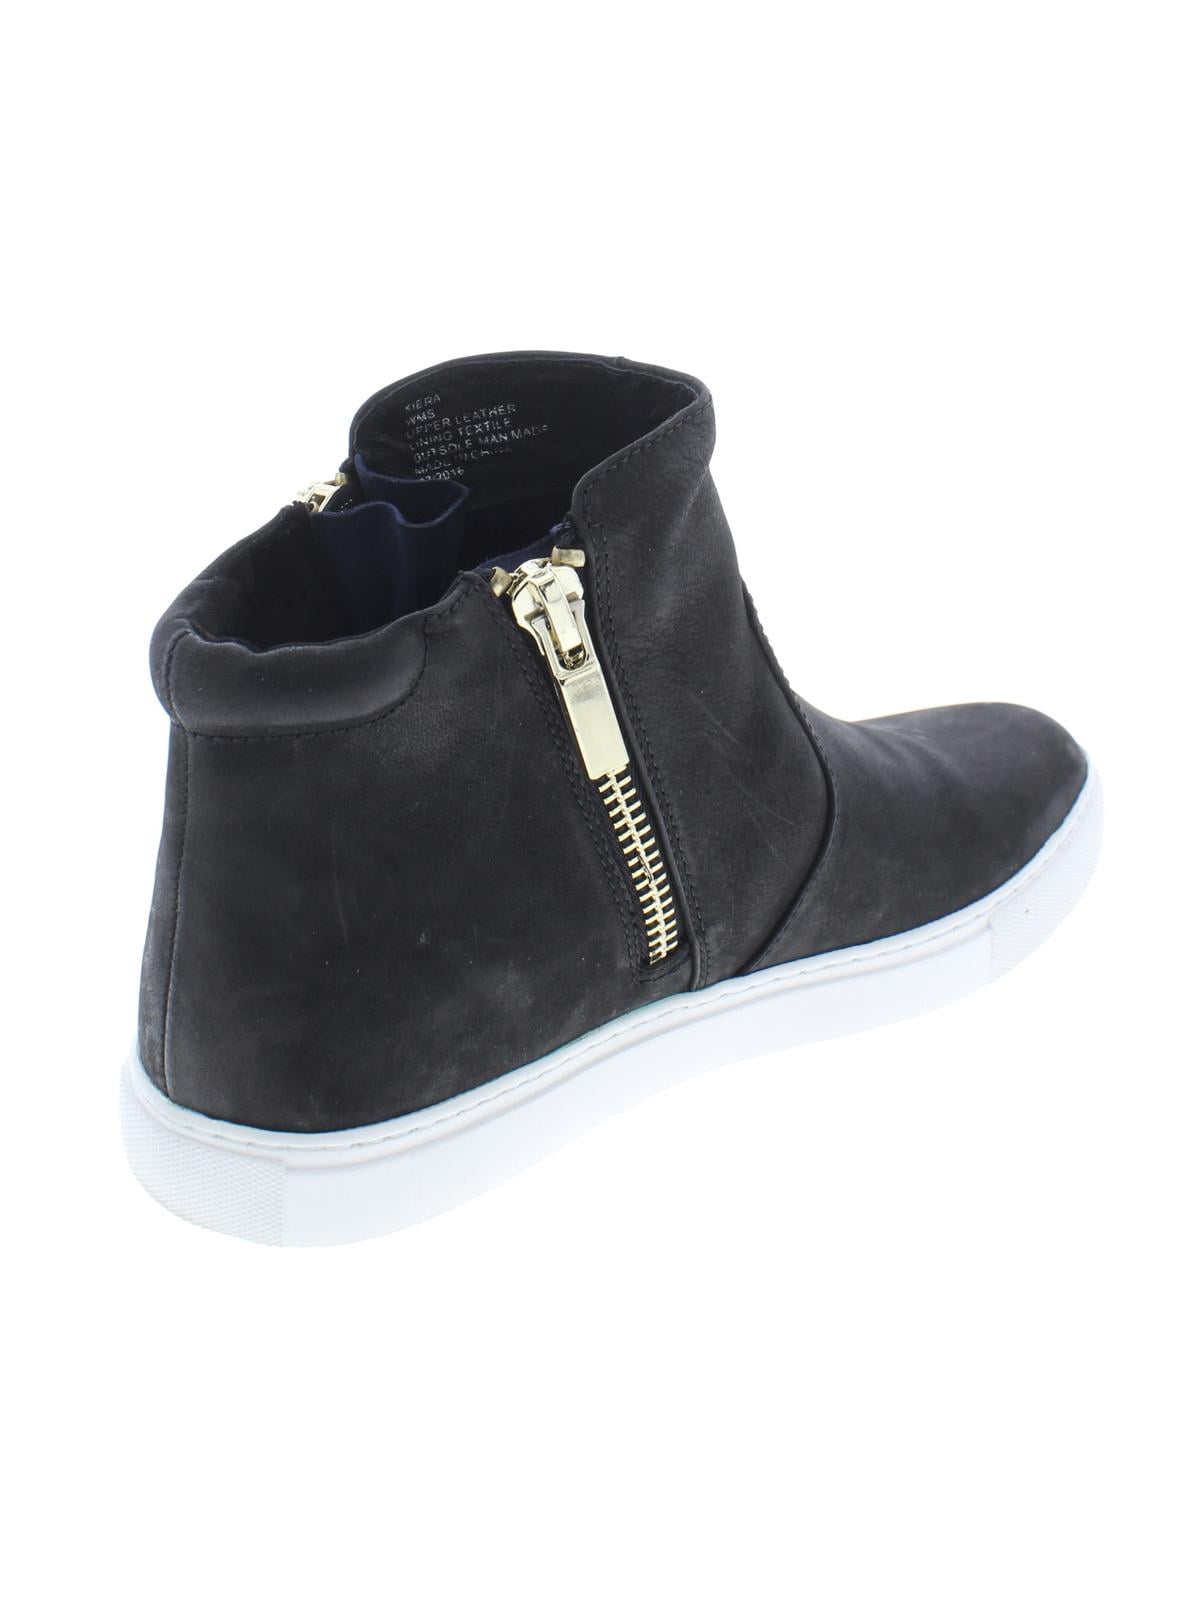 Kenneth Cole New York Womens Kiera Leather Fashion Sneakers Black Medium  (B,M)